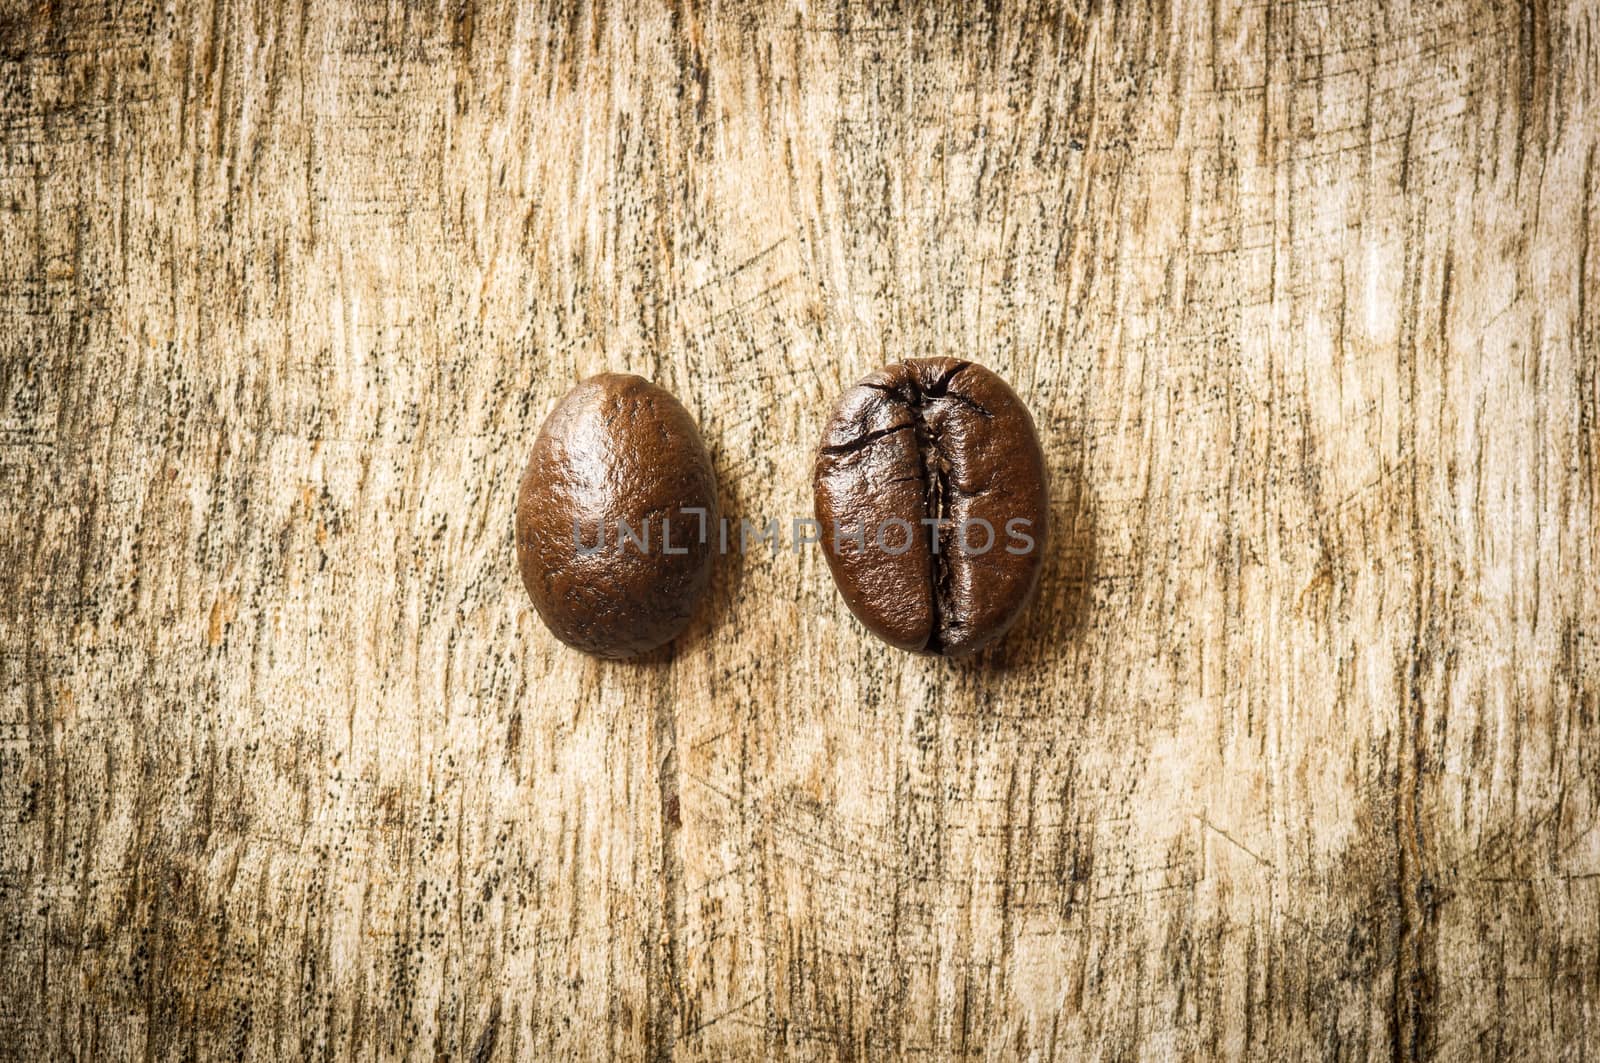 Coffee bean by seksan44